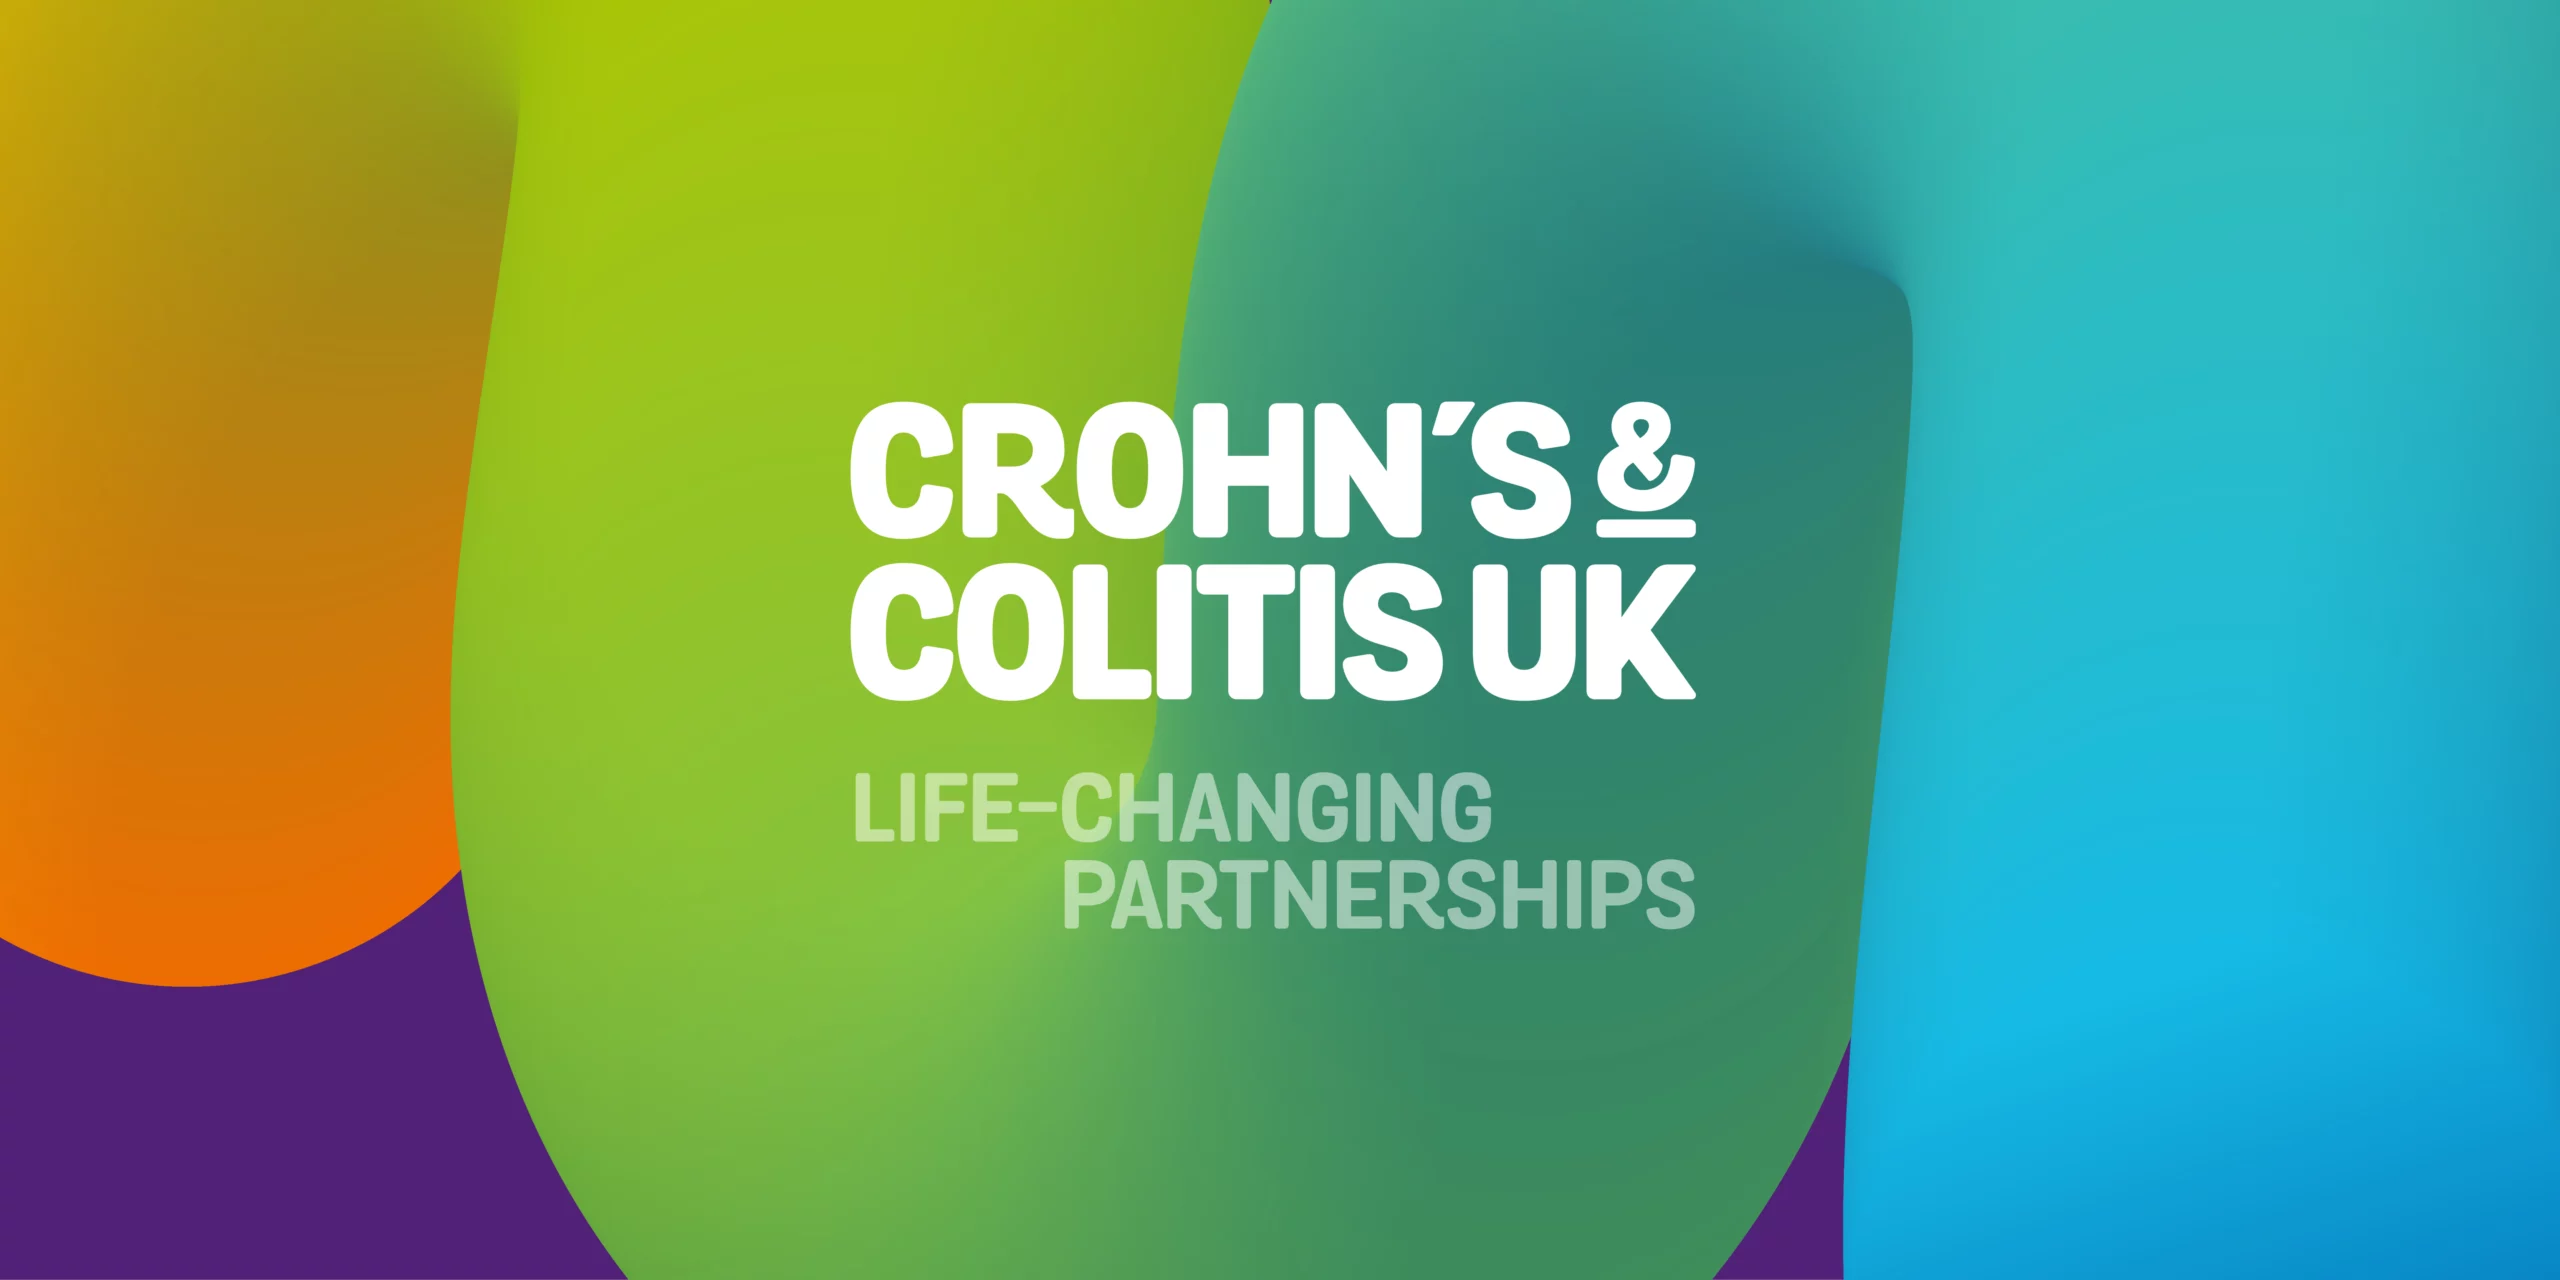 Crohn’s & Colitis UK